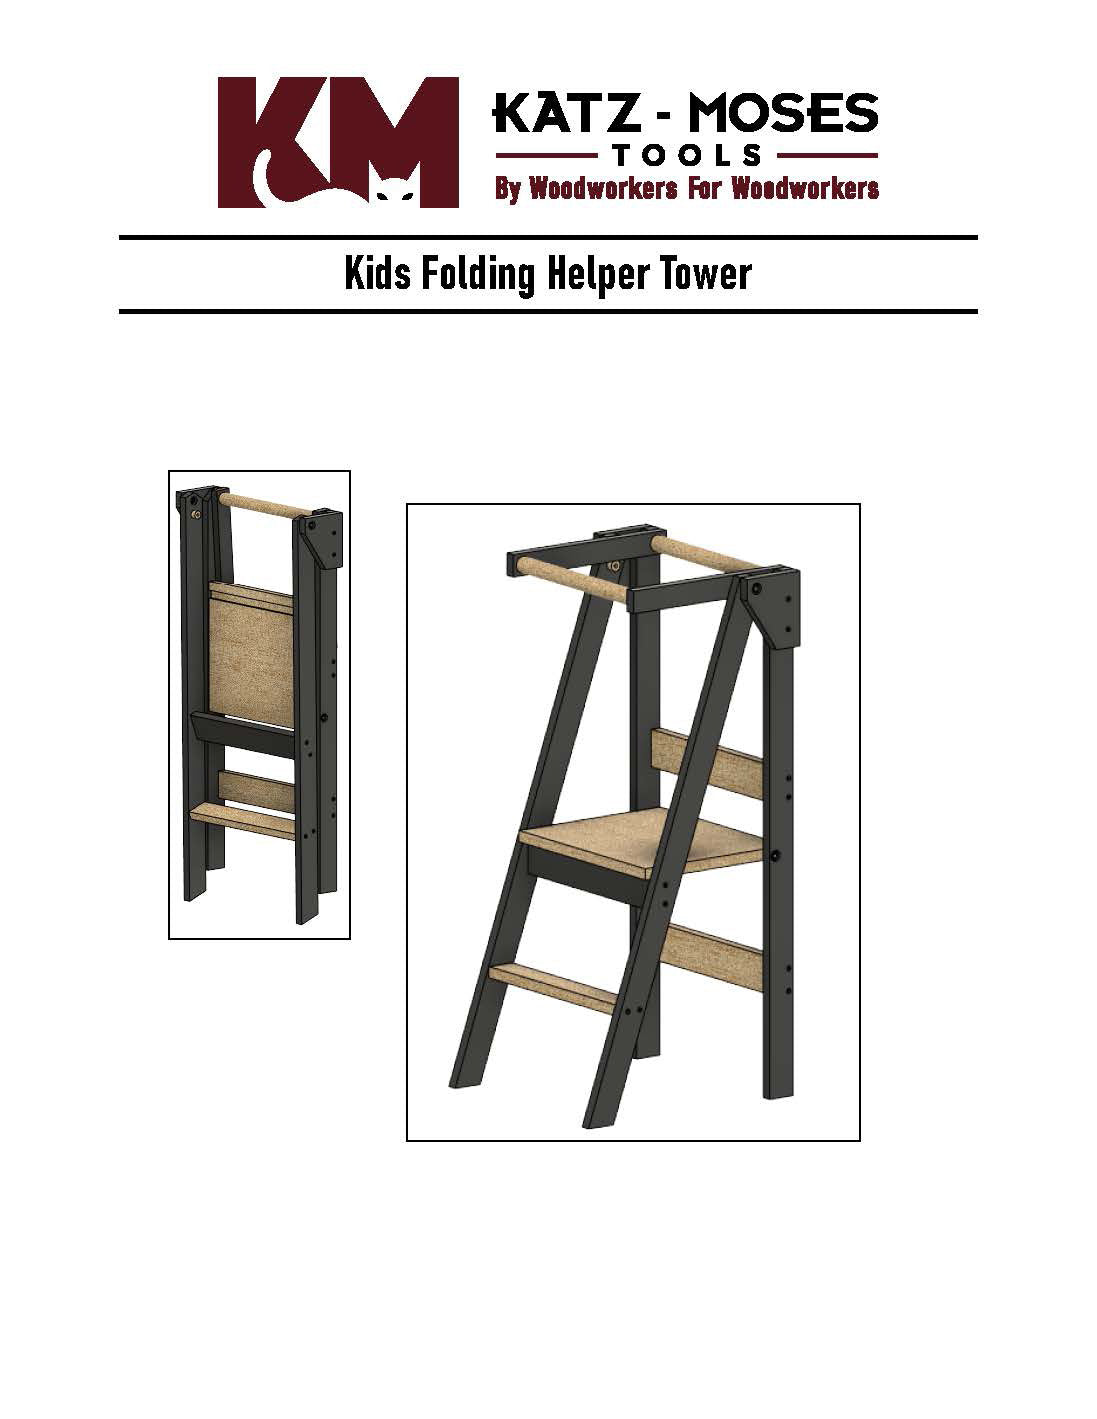 Kids Folding Helper Tower Build Plans